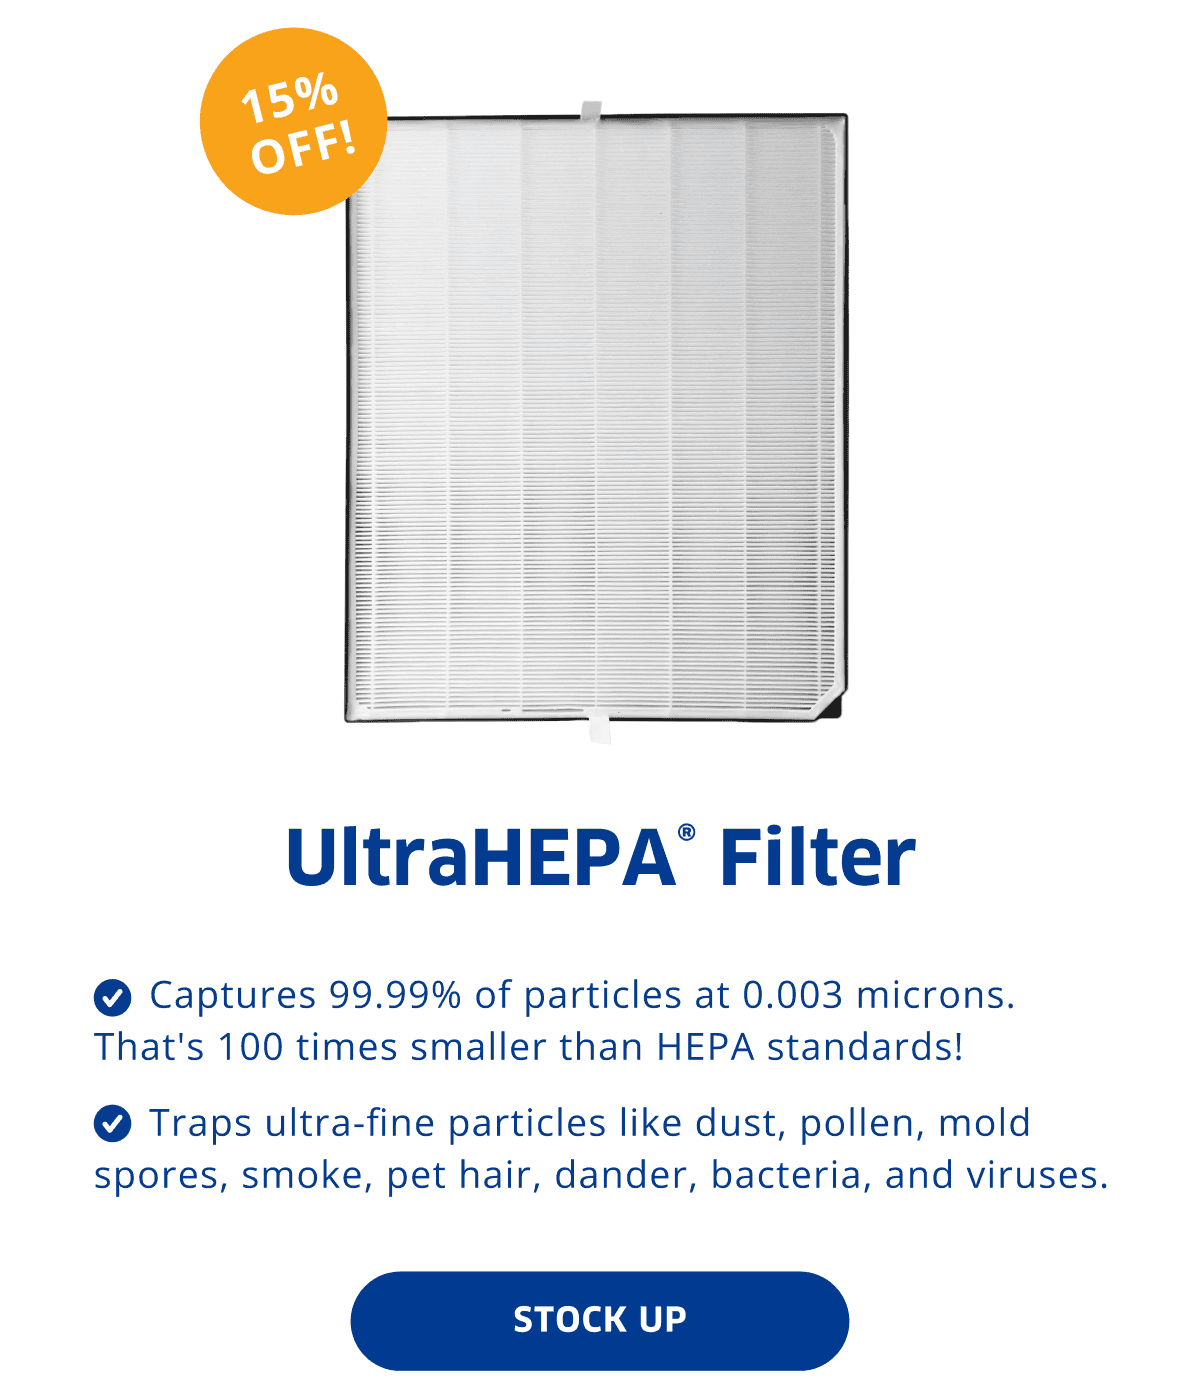 UltraHEPA Filter | Stock Up